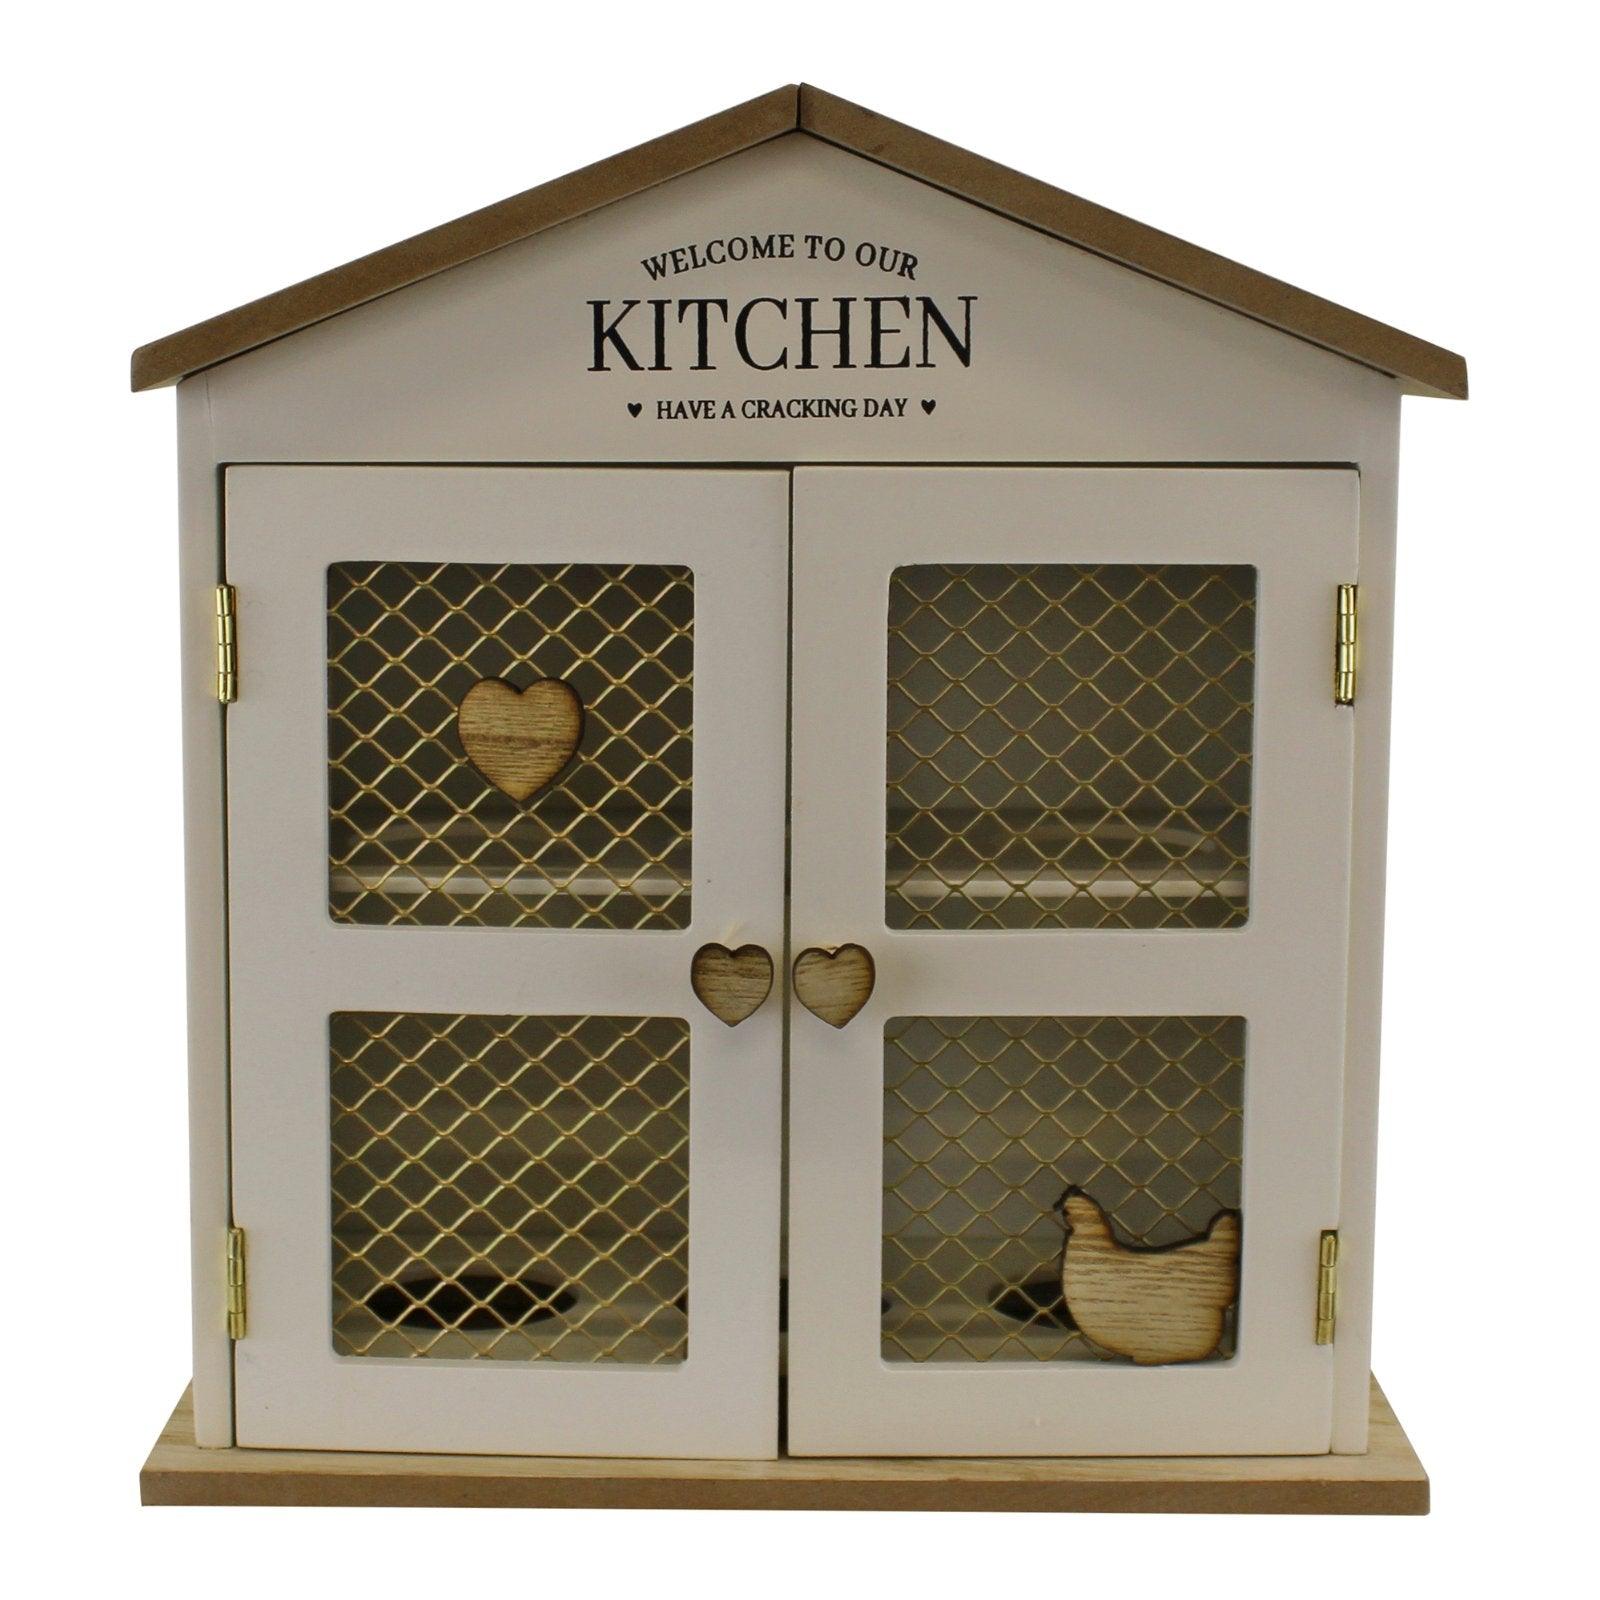 Welcome To Our Kitchen Egg House, Storage-Kitchen Storage